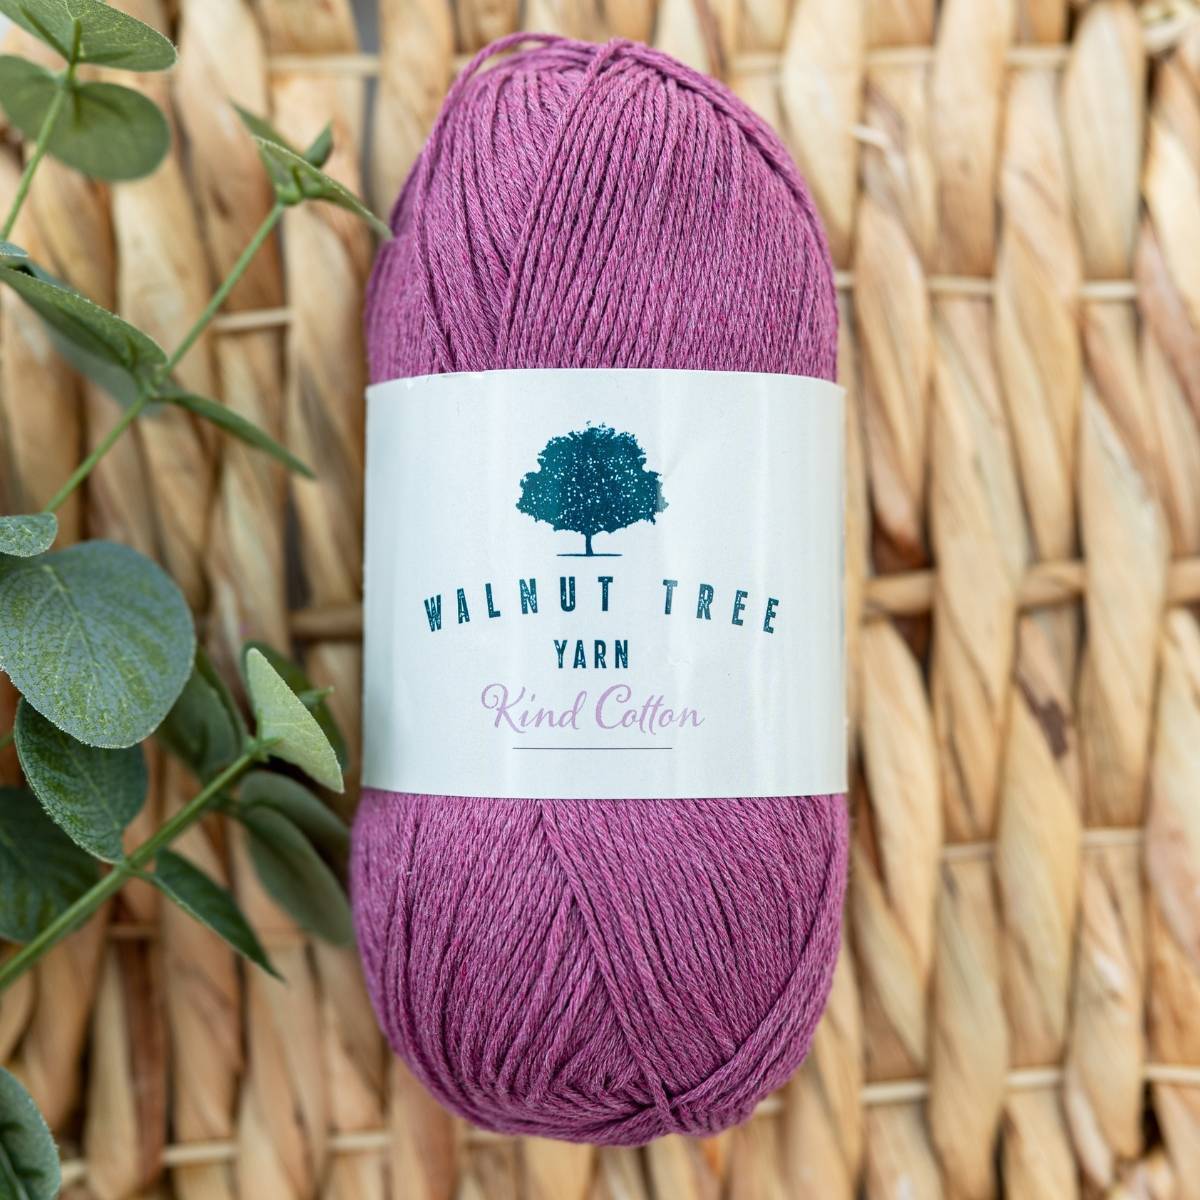 Walnut Tree Yarn Kind Cotton - Berry (004) | The Knitting Network